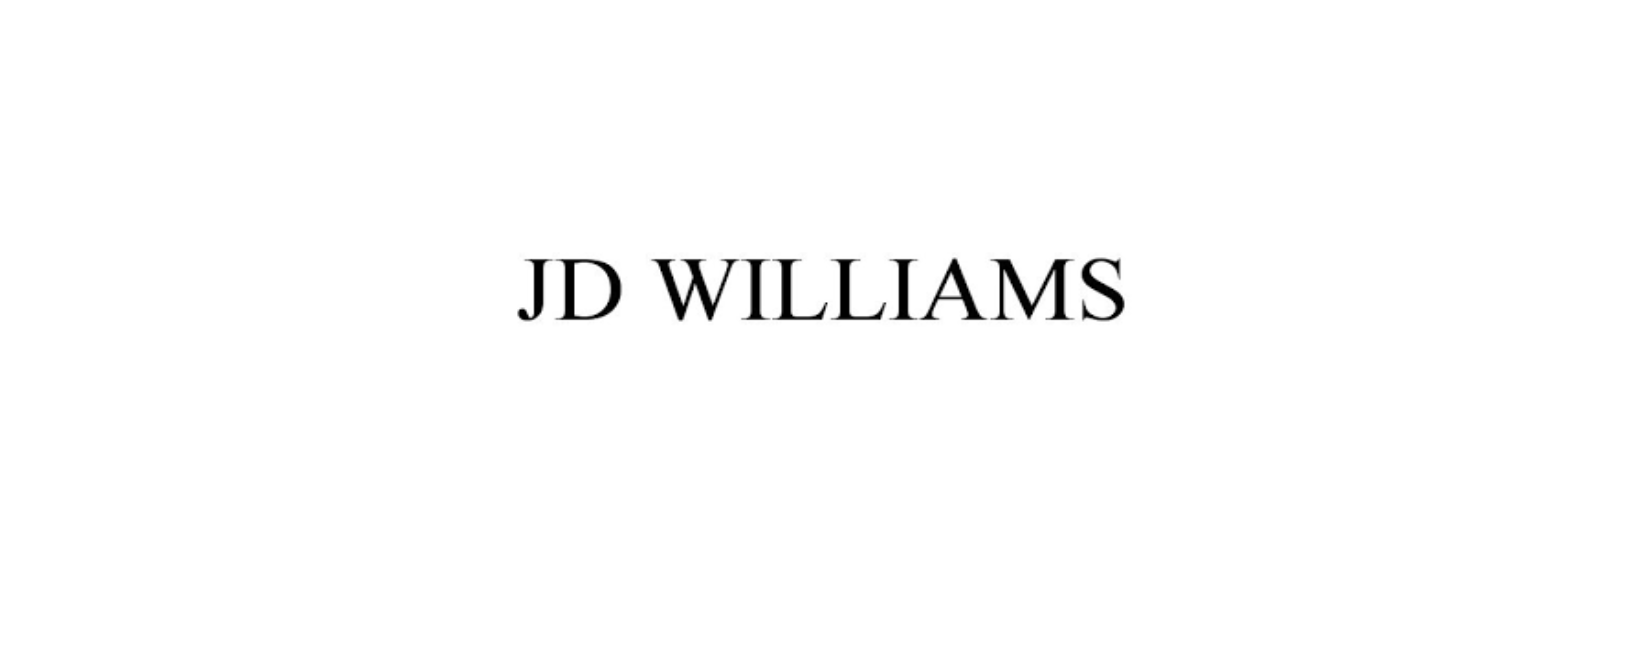 JD Williams Discount Code 2022